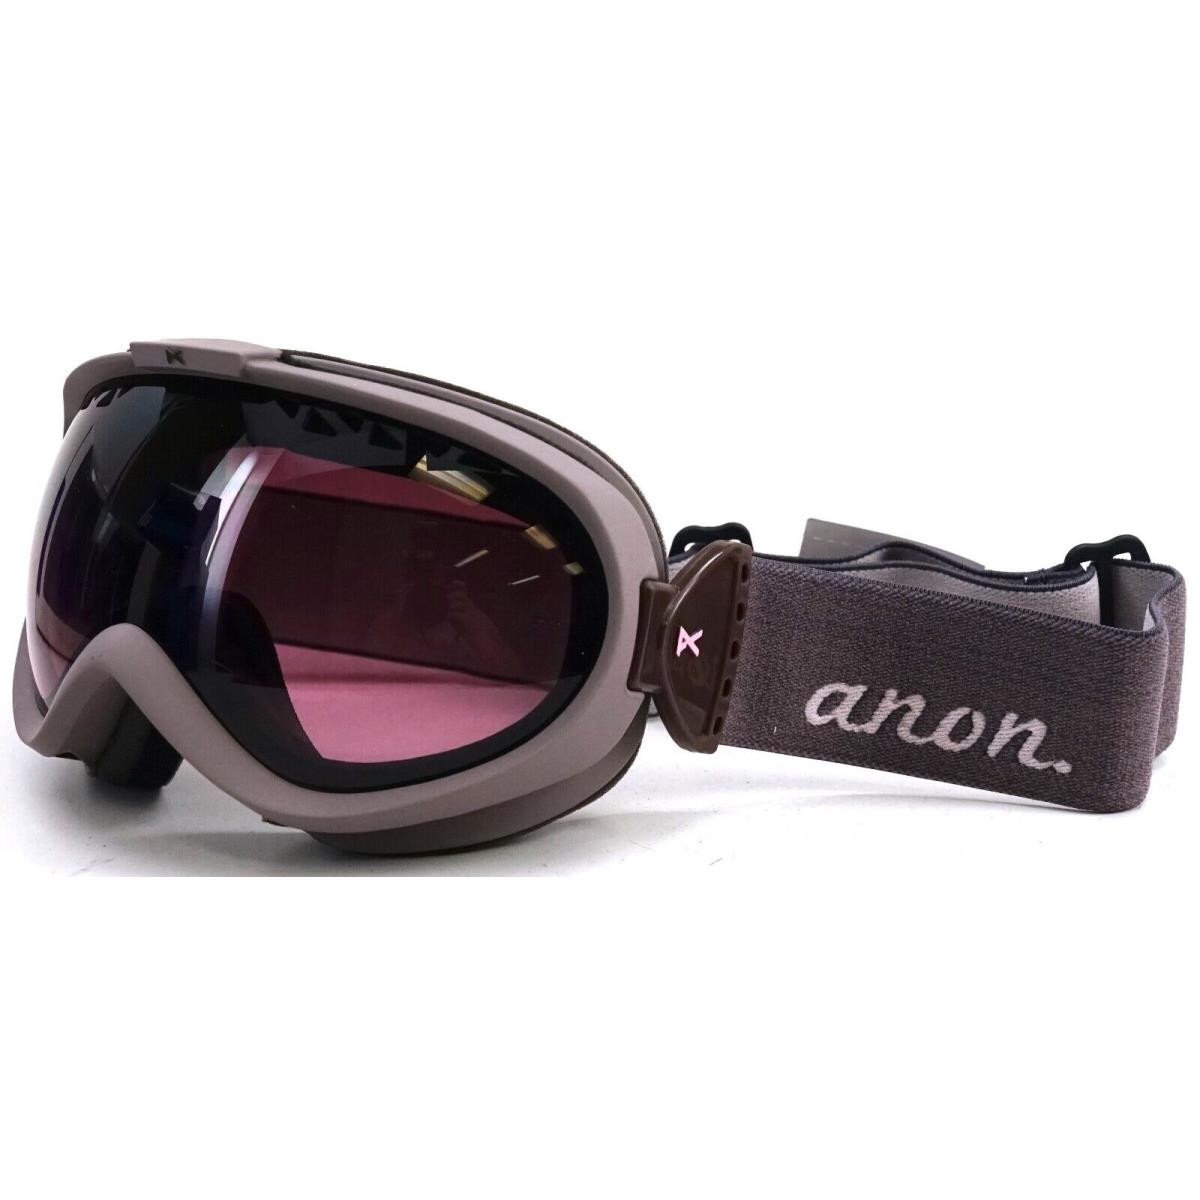 Anon Solace Eggplant Lt Rose Gradient Lens Tint Ski Snowboarding Goggles